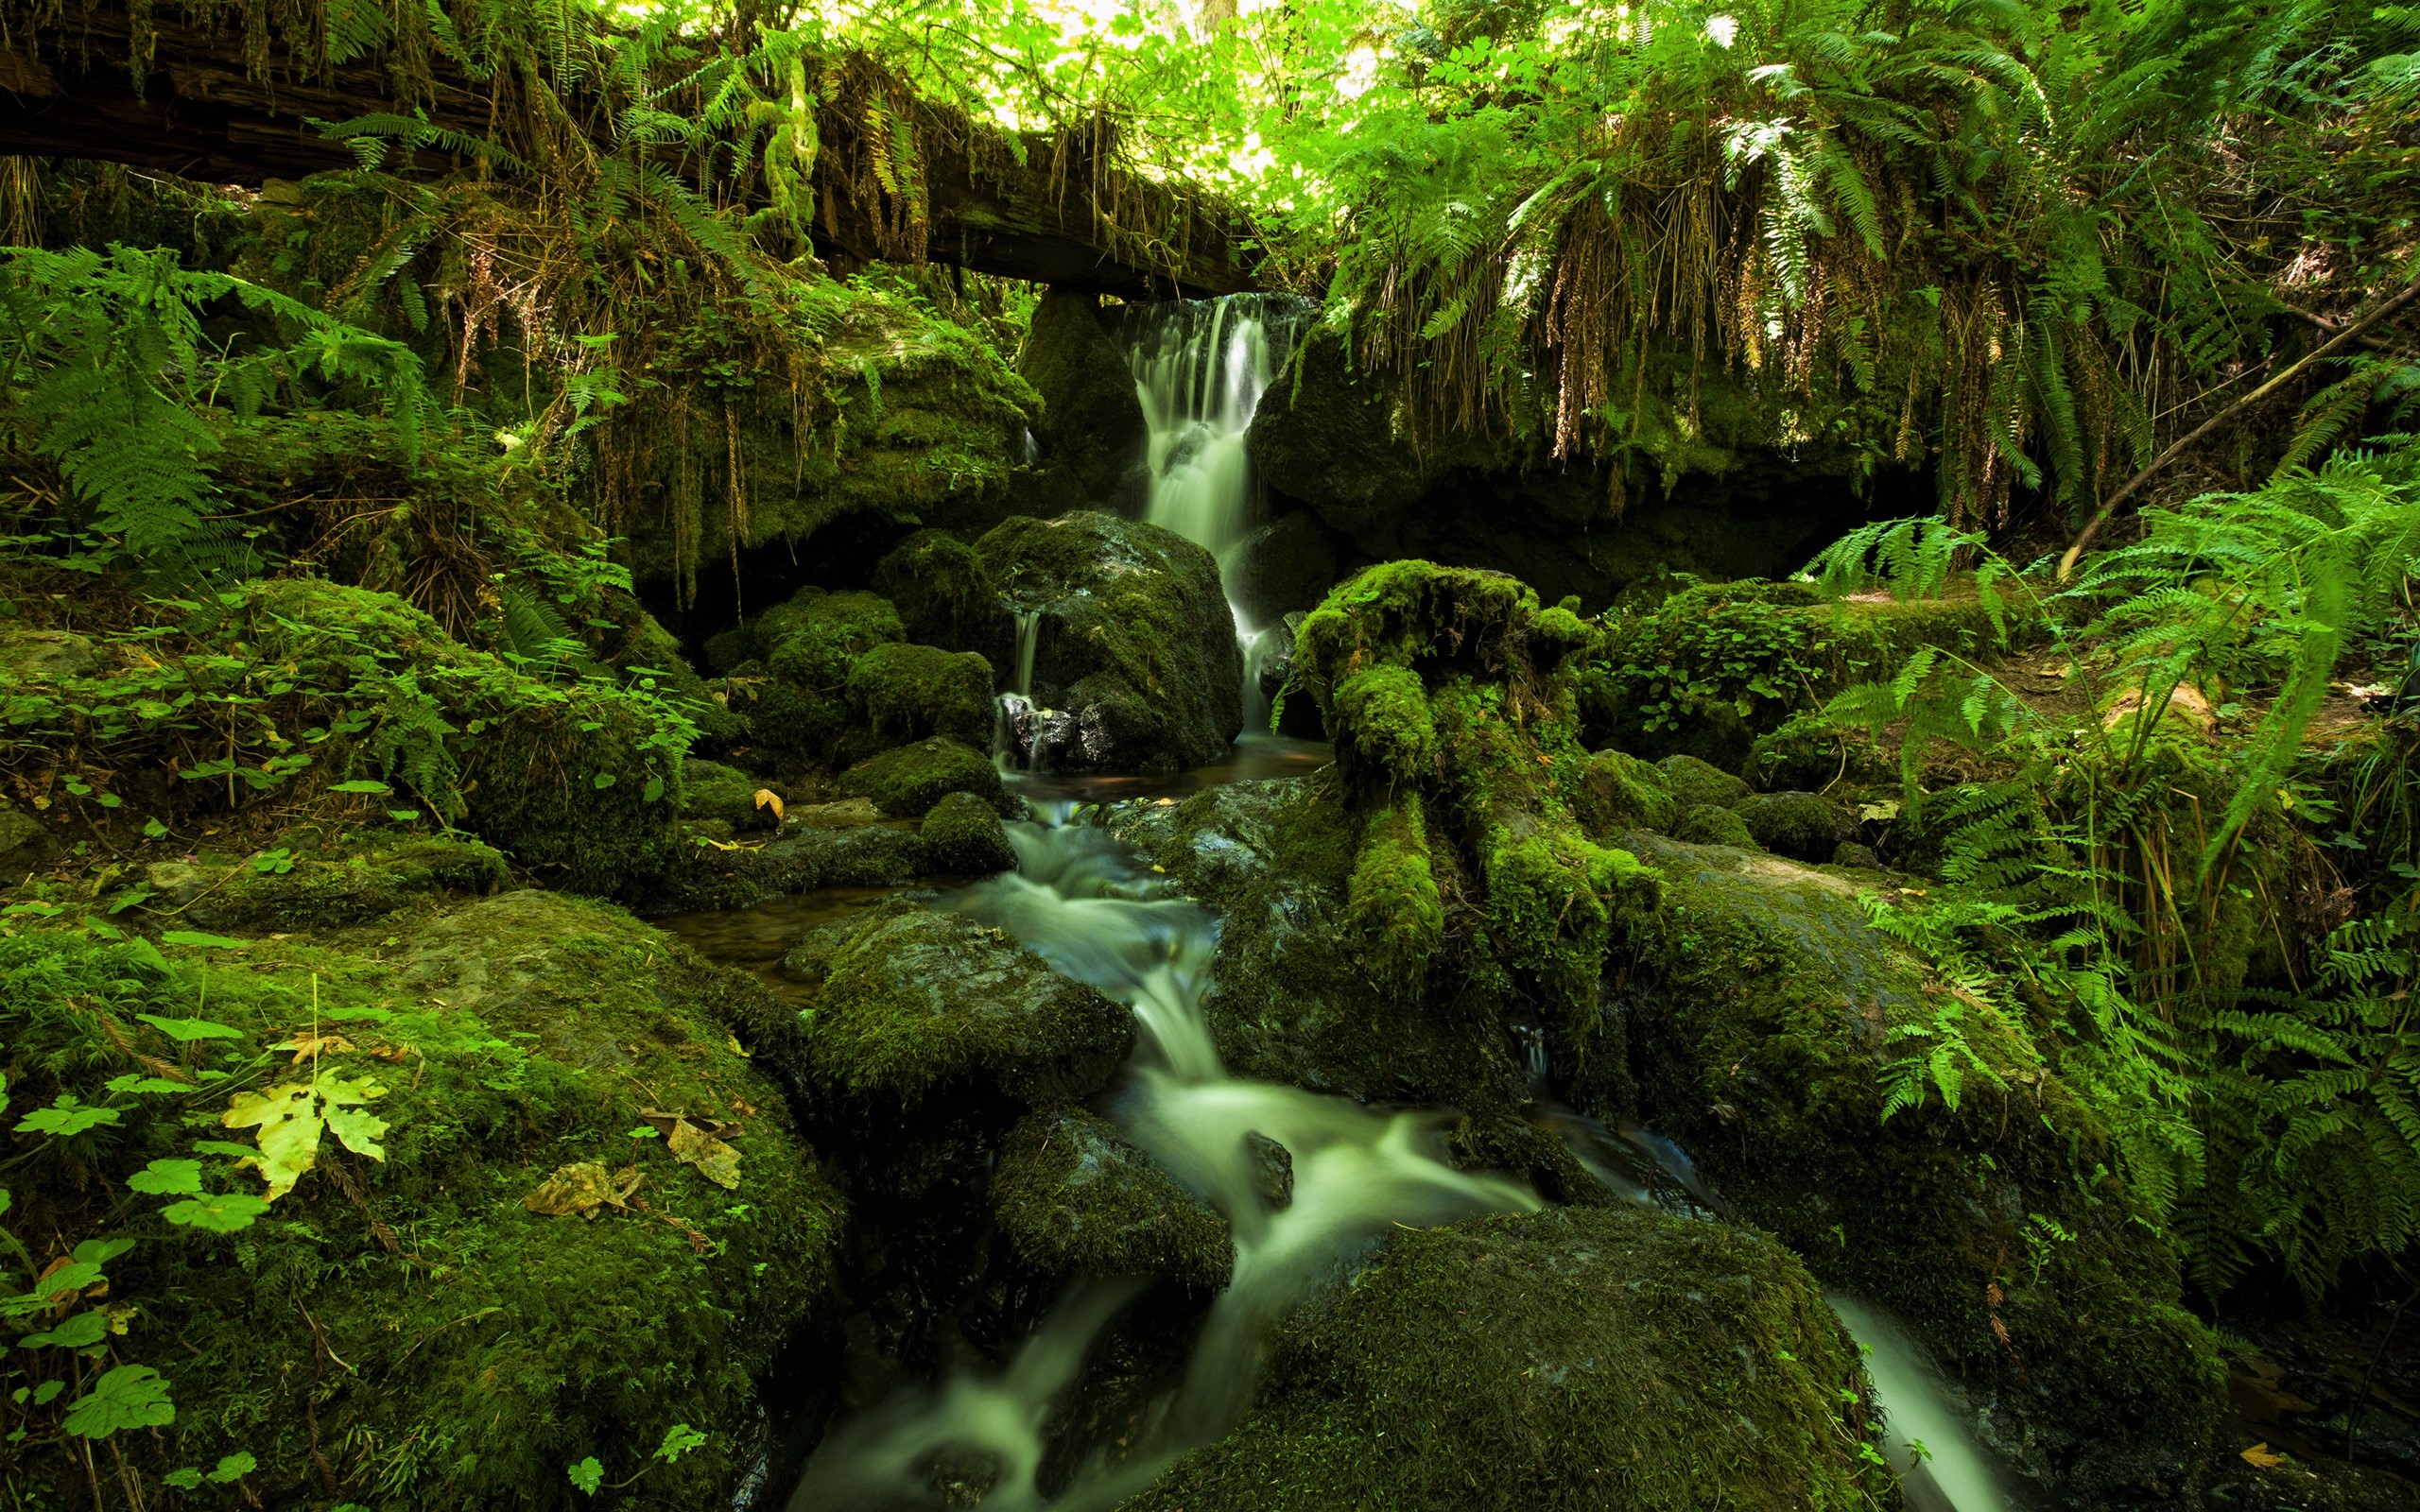 Descarga gratis la imagen Cascadas, Cascada, Selva, Chorro, Tierra/naturaleza, Verdor en el escritorio de tu PC